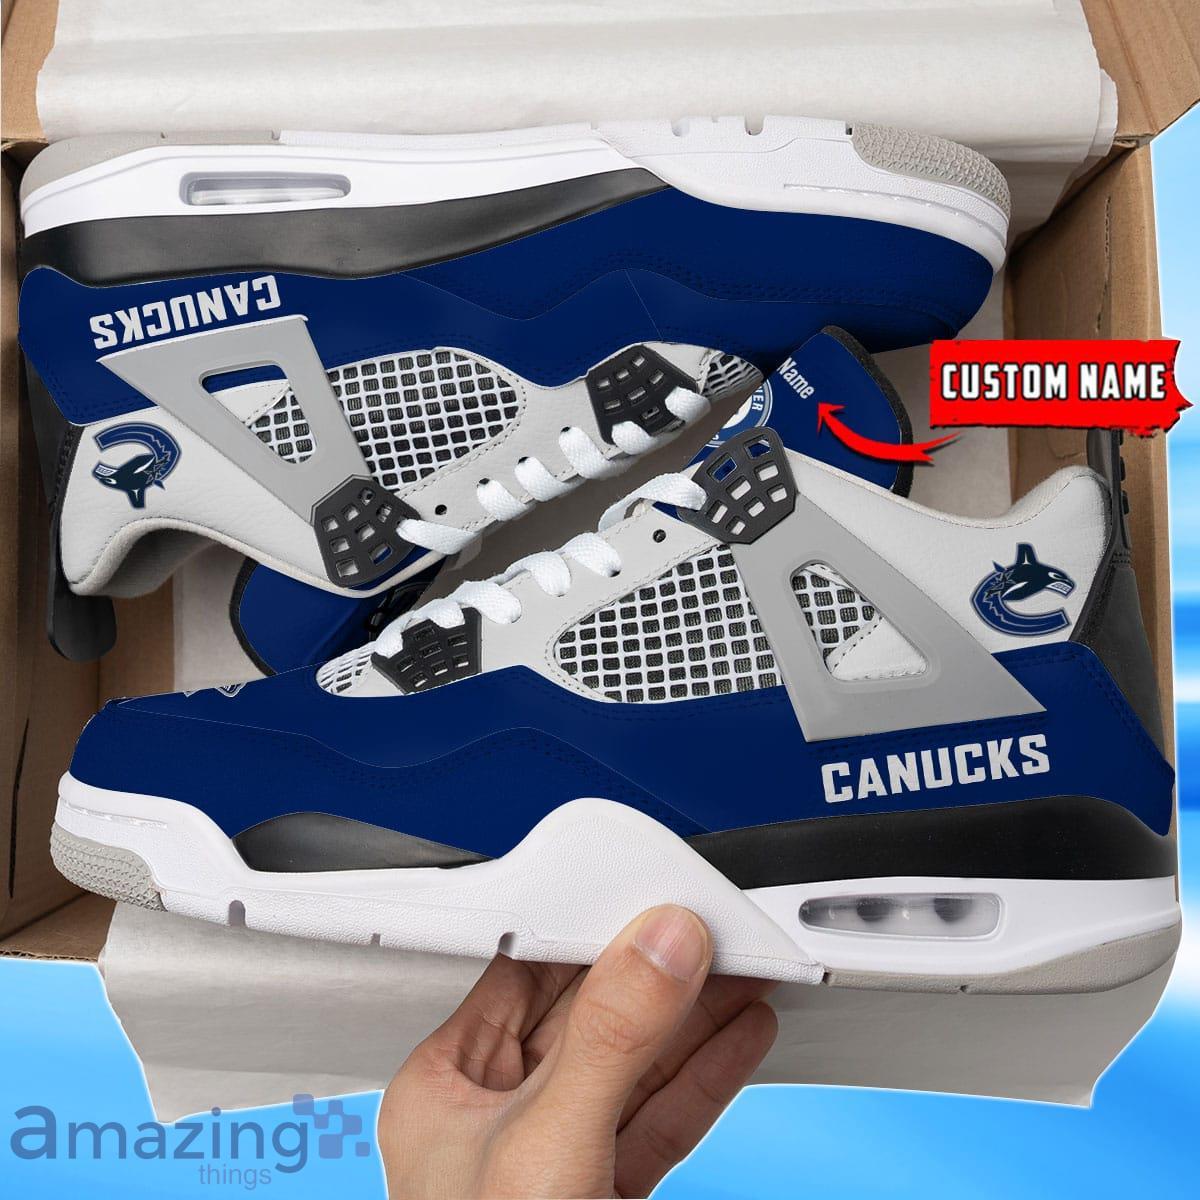 Vancouver Canucks Custom Name Air Jordan 4 Shoes Impressive Gift For Men Women Product Photo 1